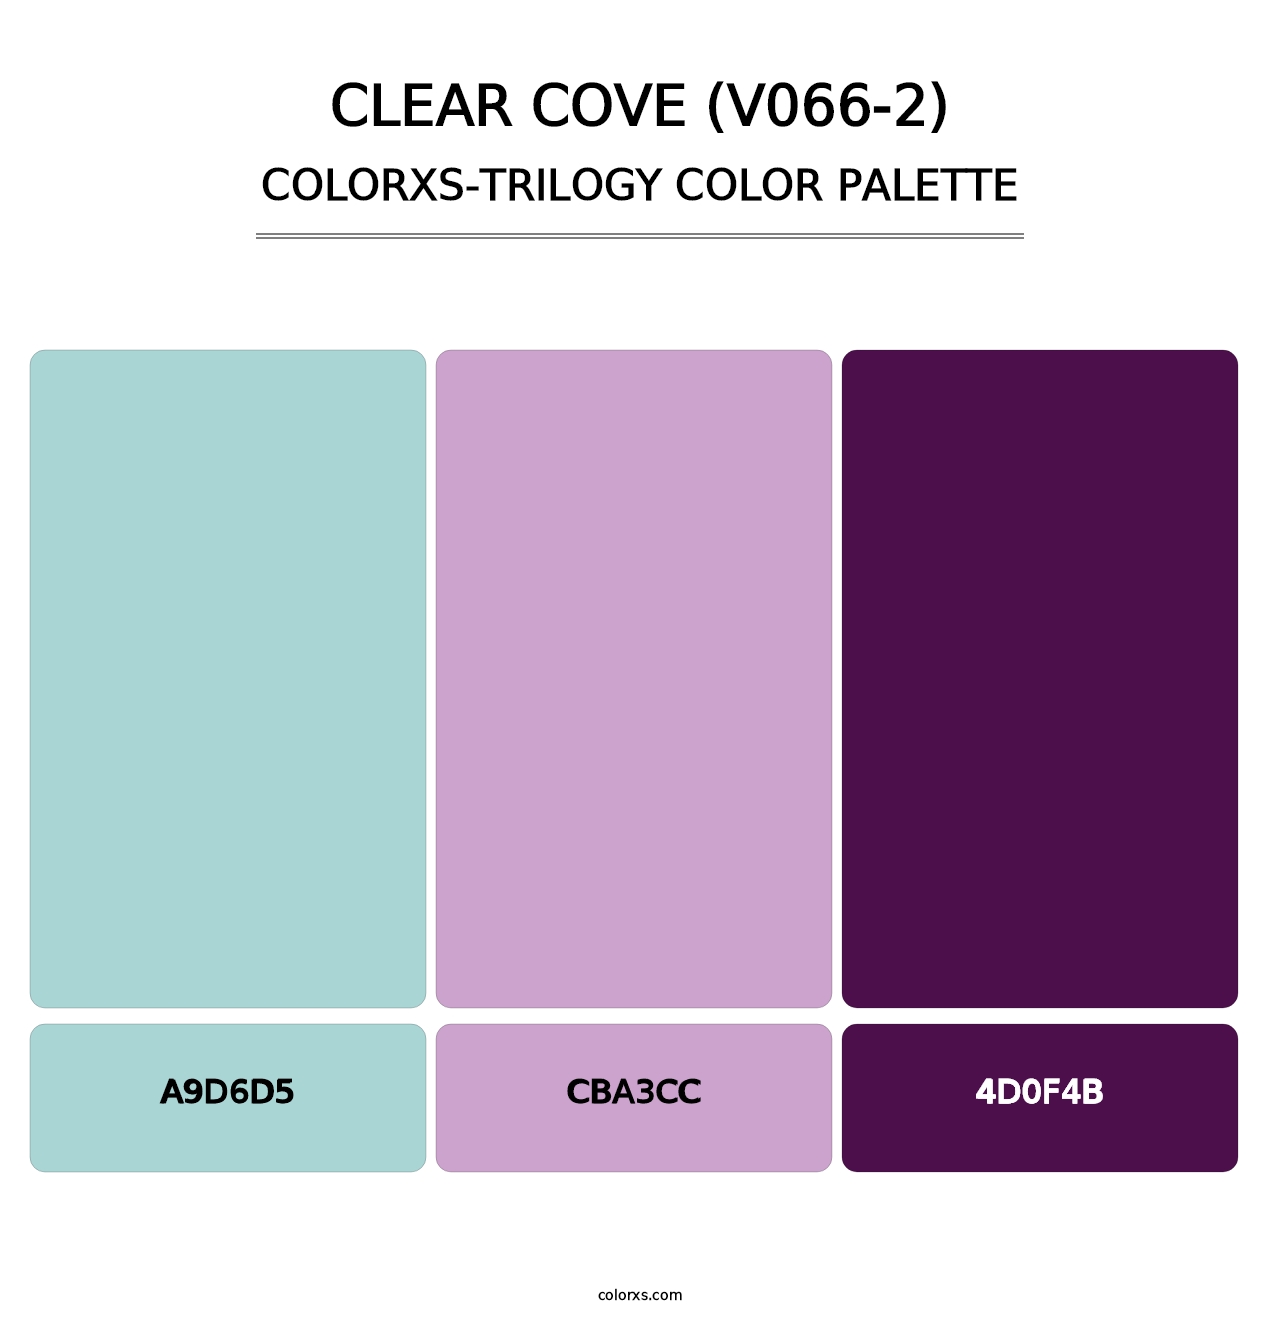 Clear Cove (V066-2) - Colorxs Trilogy Palette